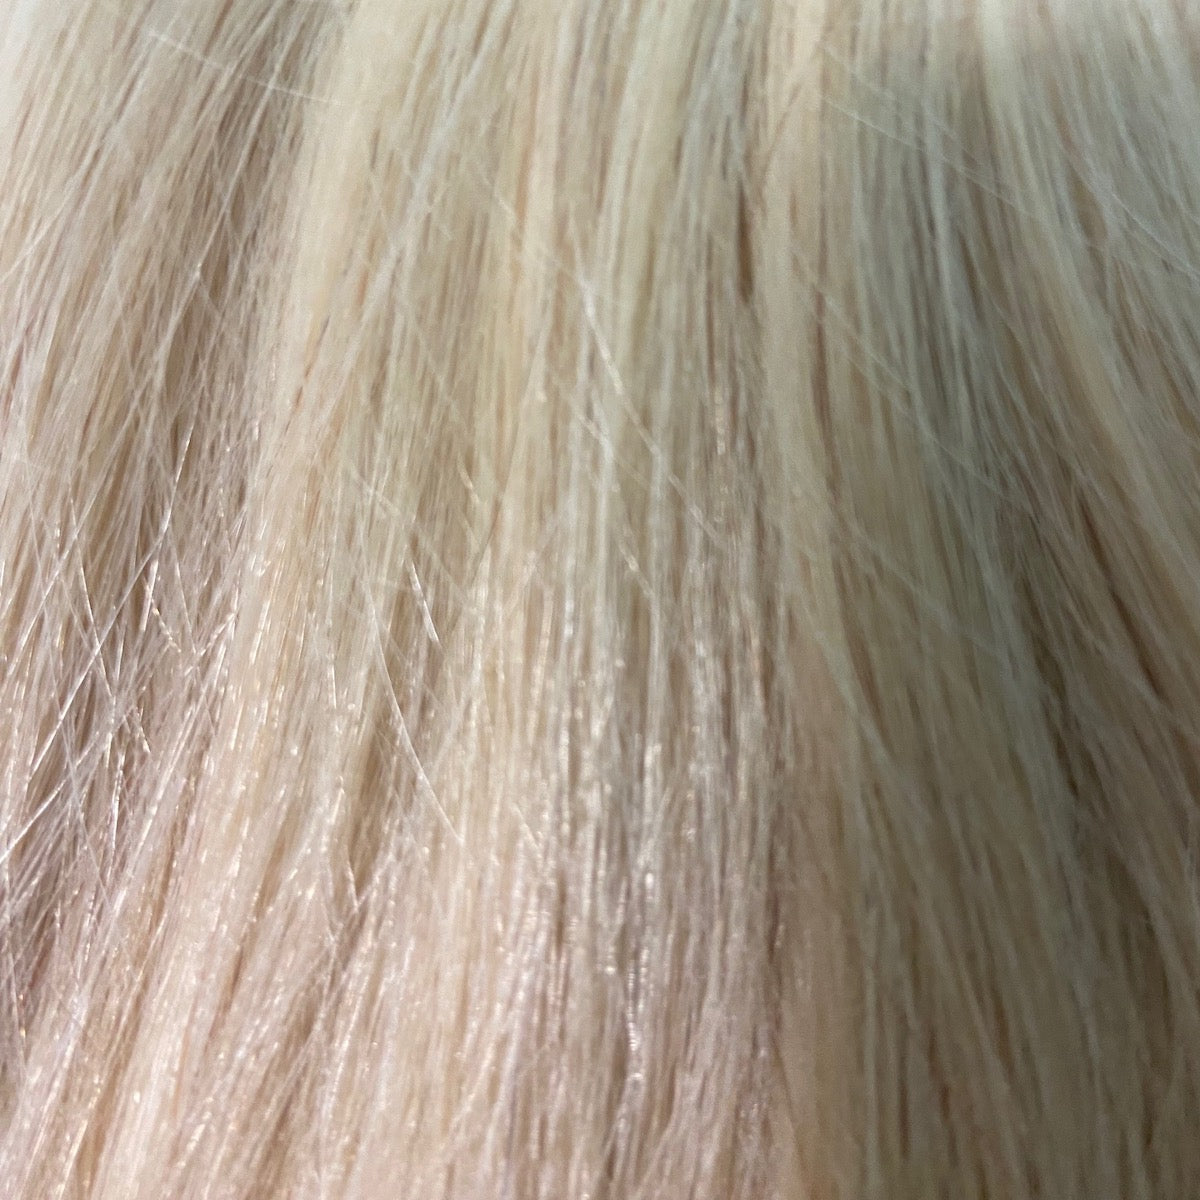 Tape-In 16" 50g Professional Hair Extensions - #19 Desert Blonde